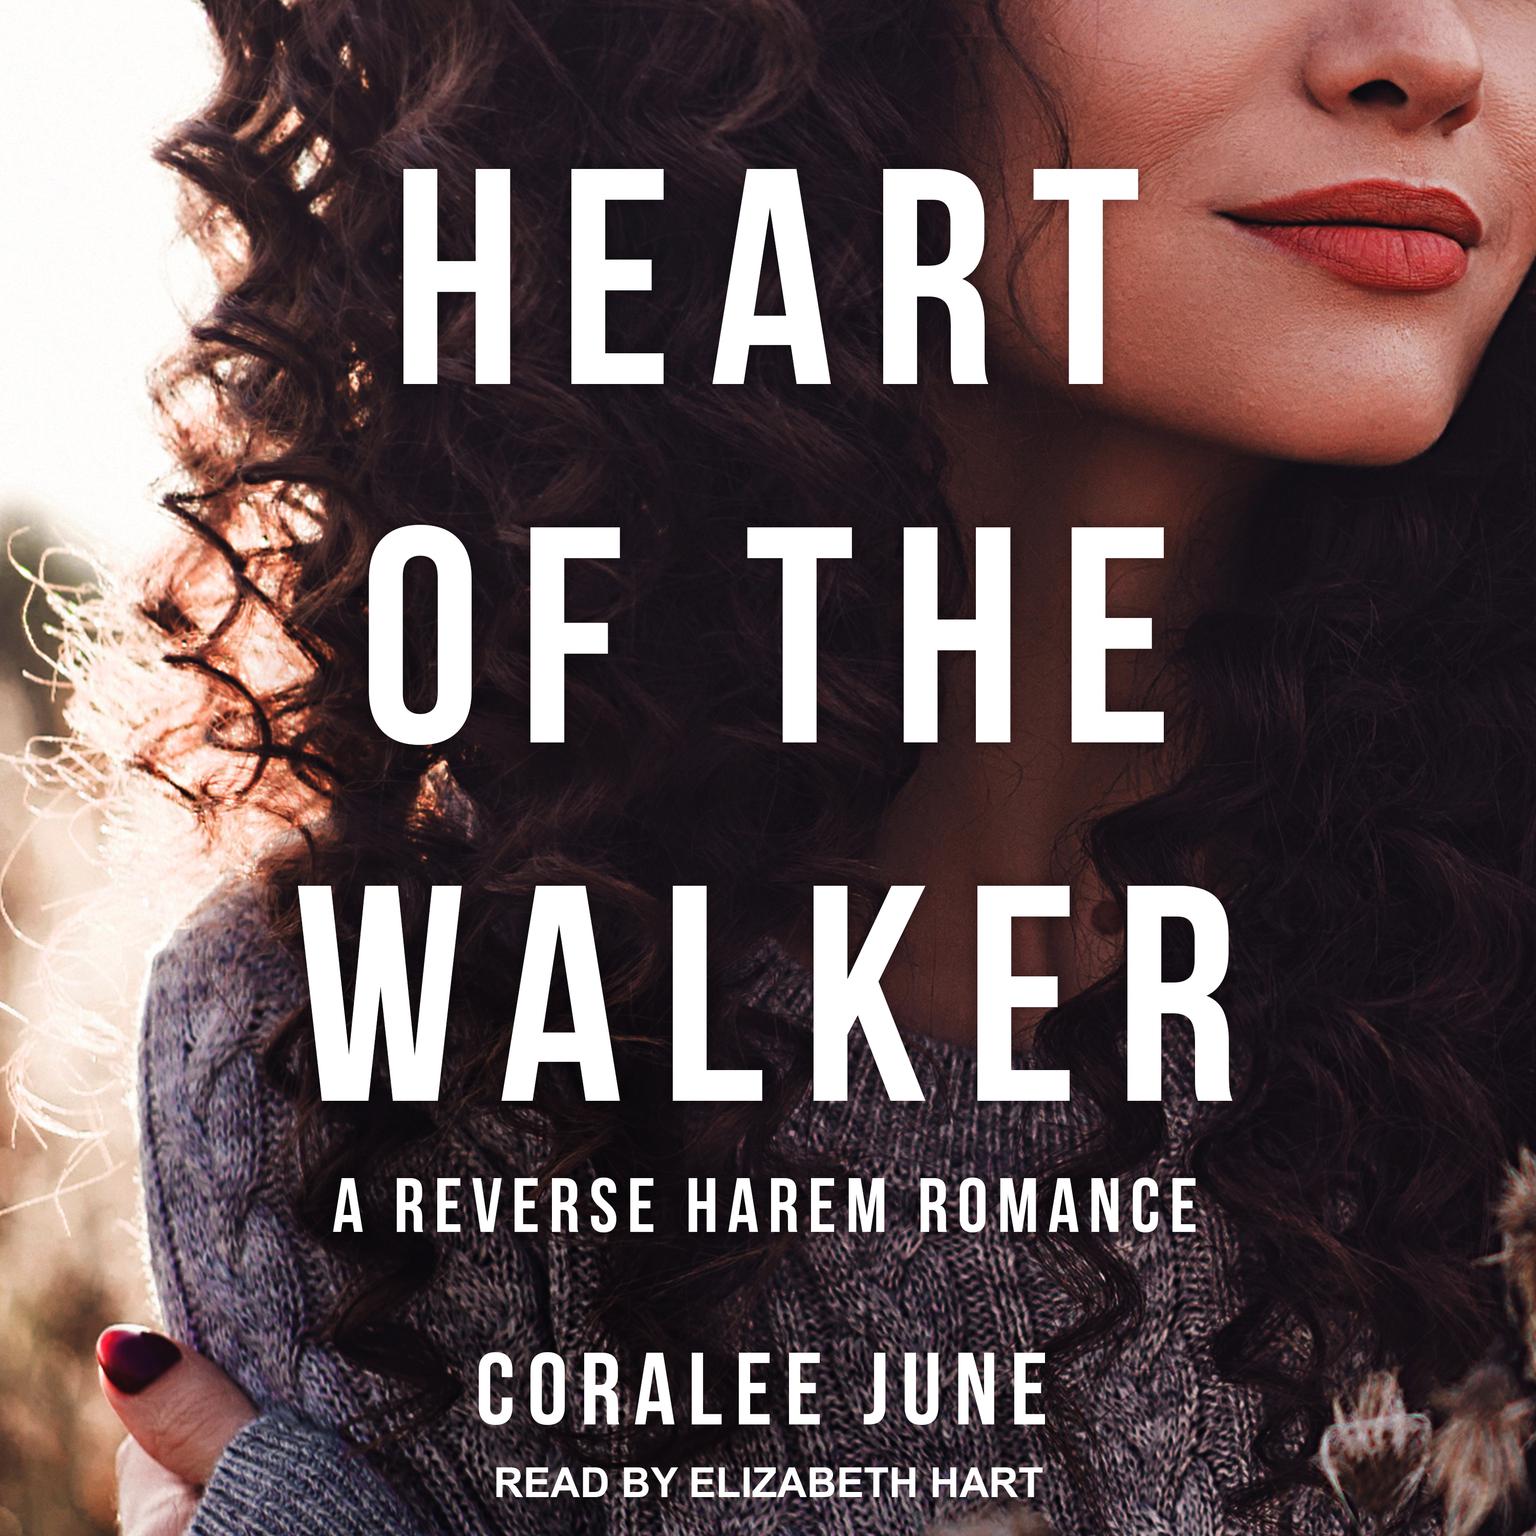 Heart of the Walker Audiobook, by Coralee June